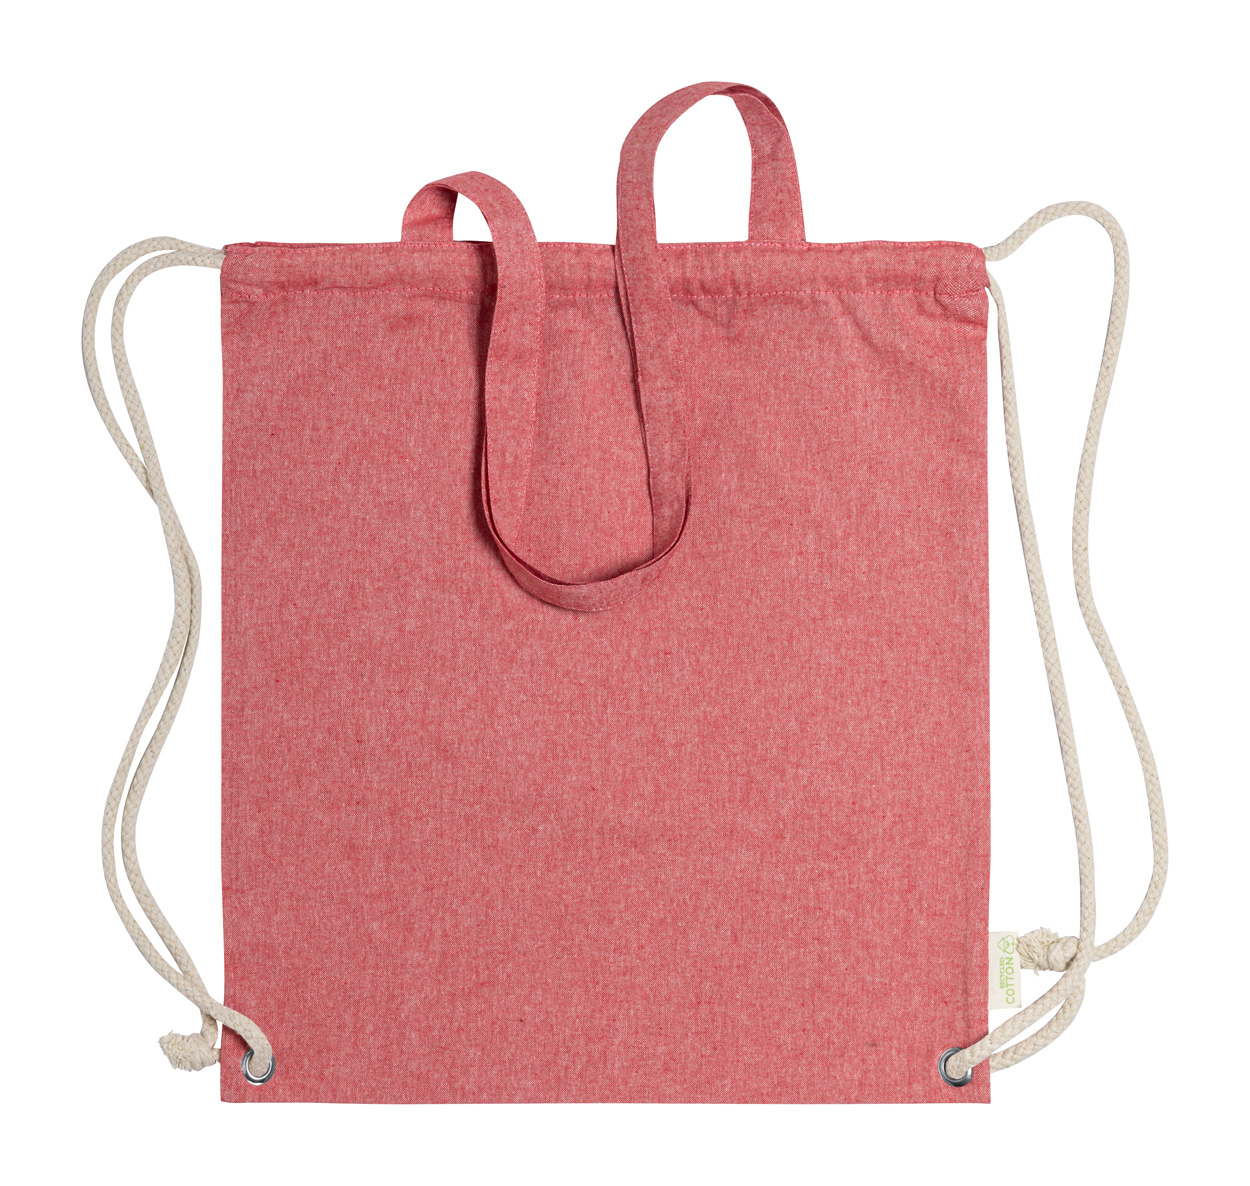 Fenin drawstring bag - red